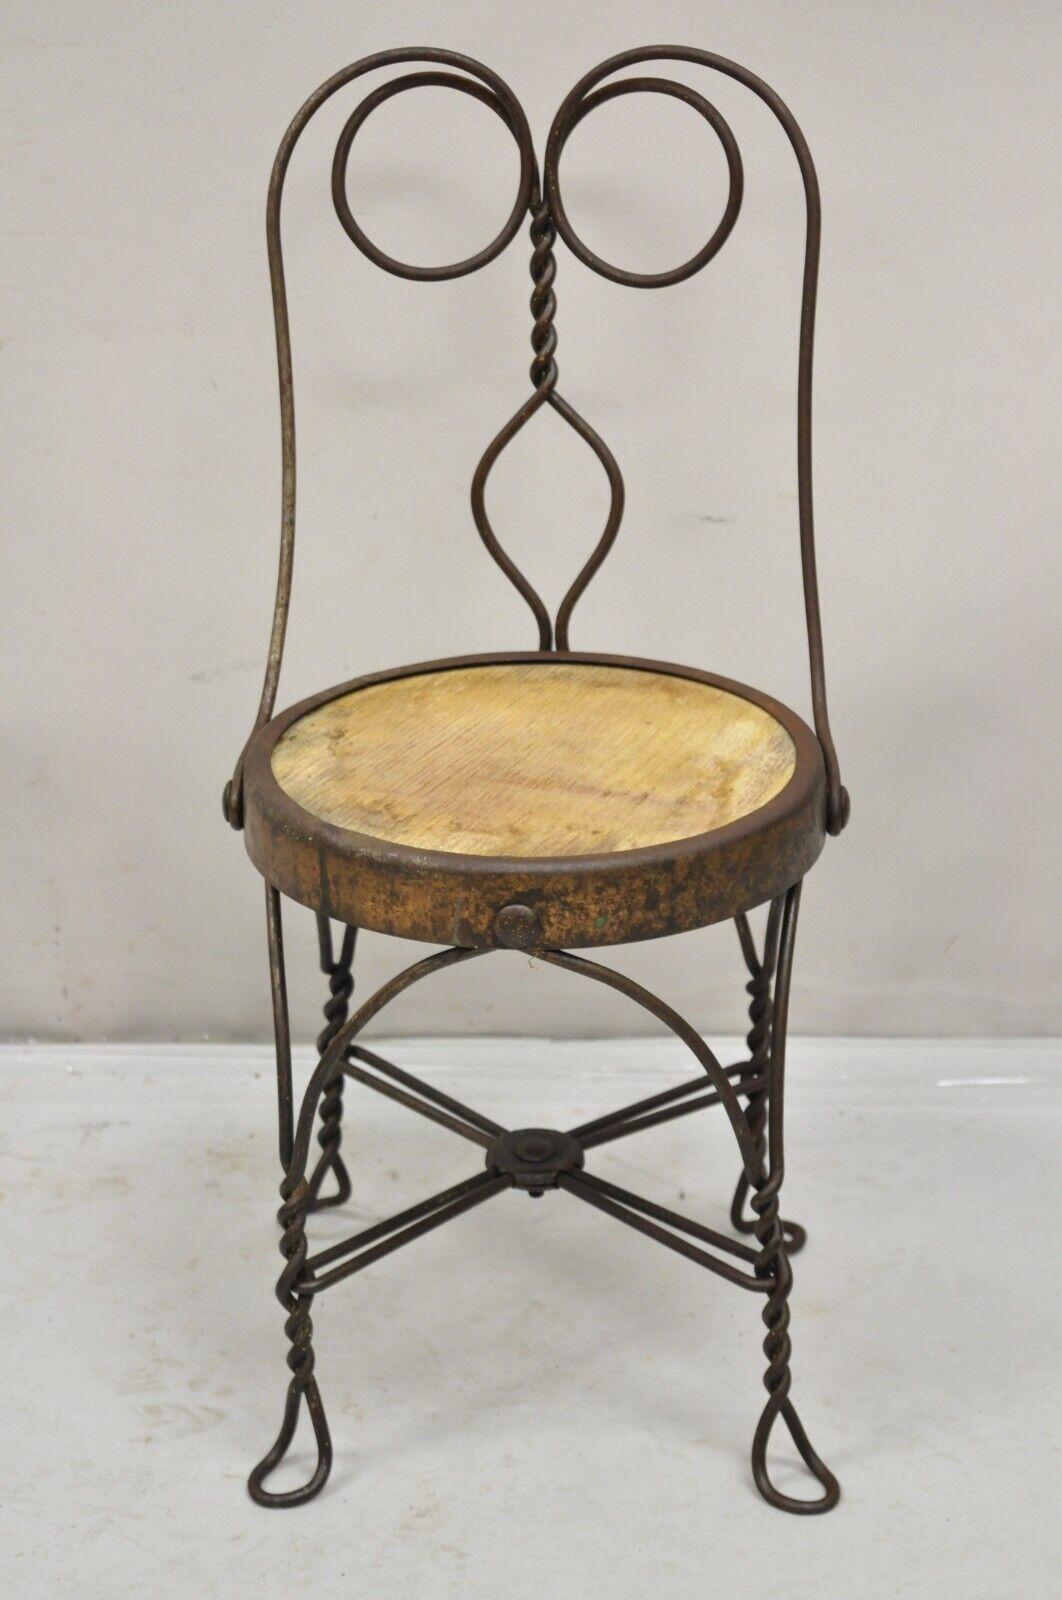 Antike viktorianische Twisted Wire Holzsitz Small Child's Sweetheart Back Ice Cream Parlor Chair. Circa 19. Jahrhundert.
Abmessungen: 22,5